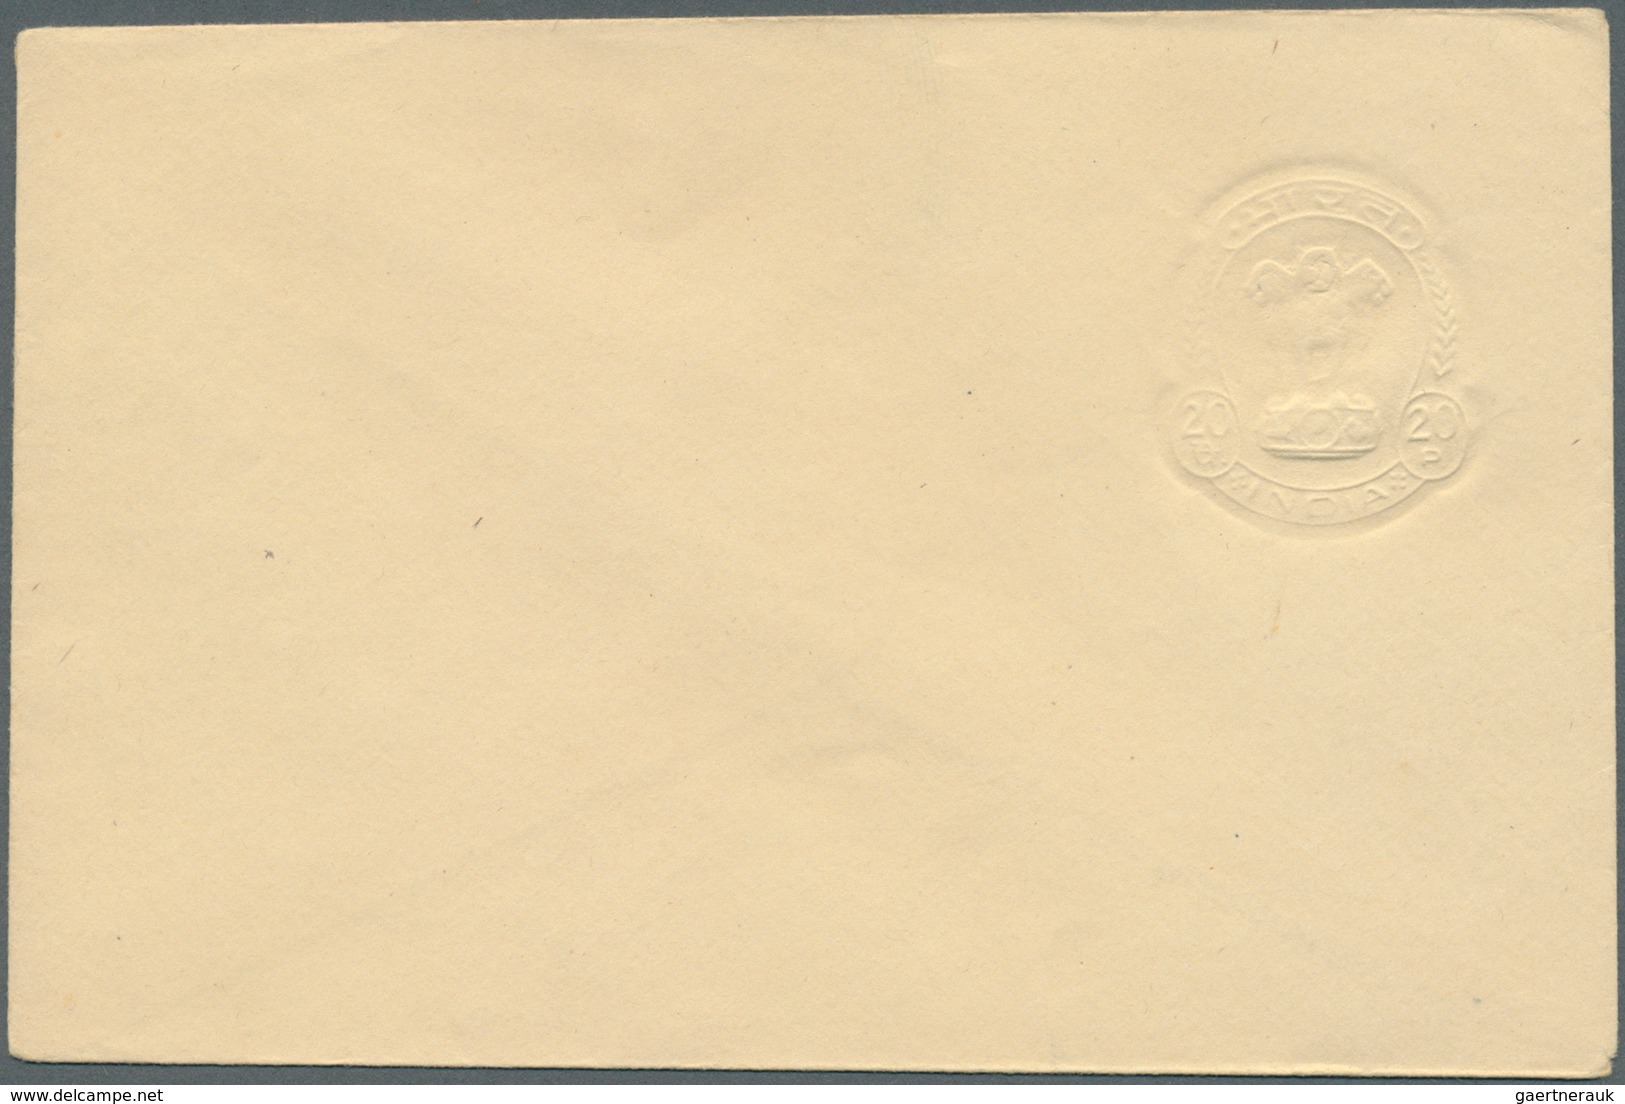 Indien - Ganzsachen: 1850's-1970's ca.: Collection of Indian postal stationery envelopes, letter she